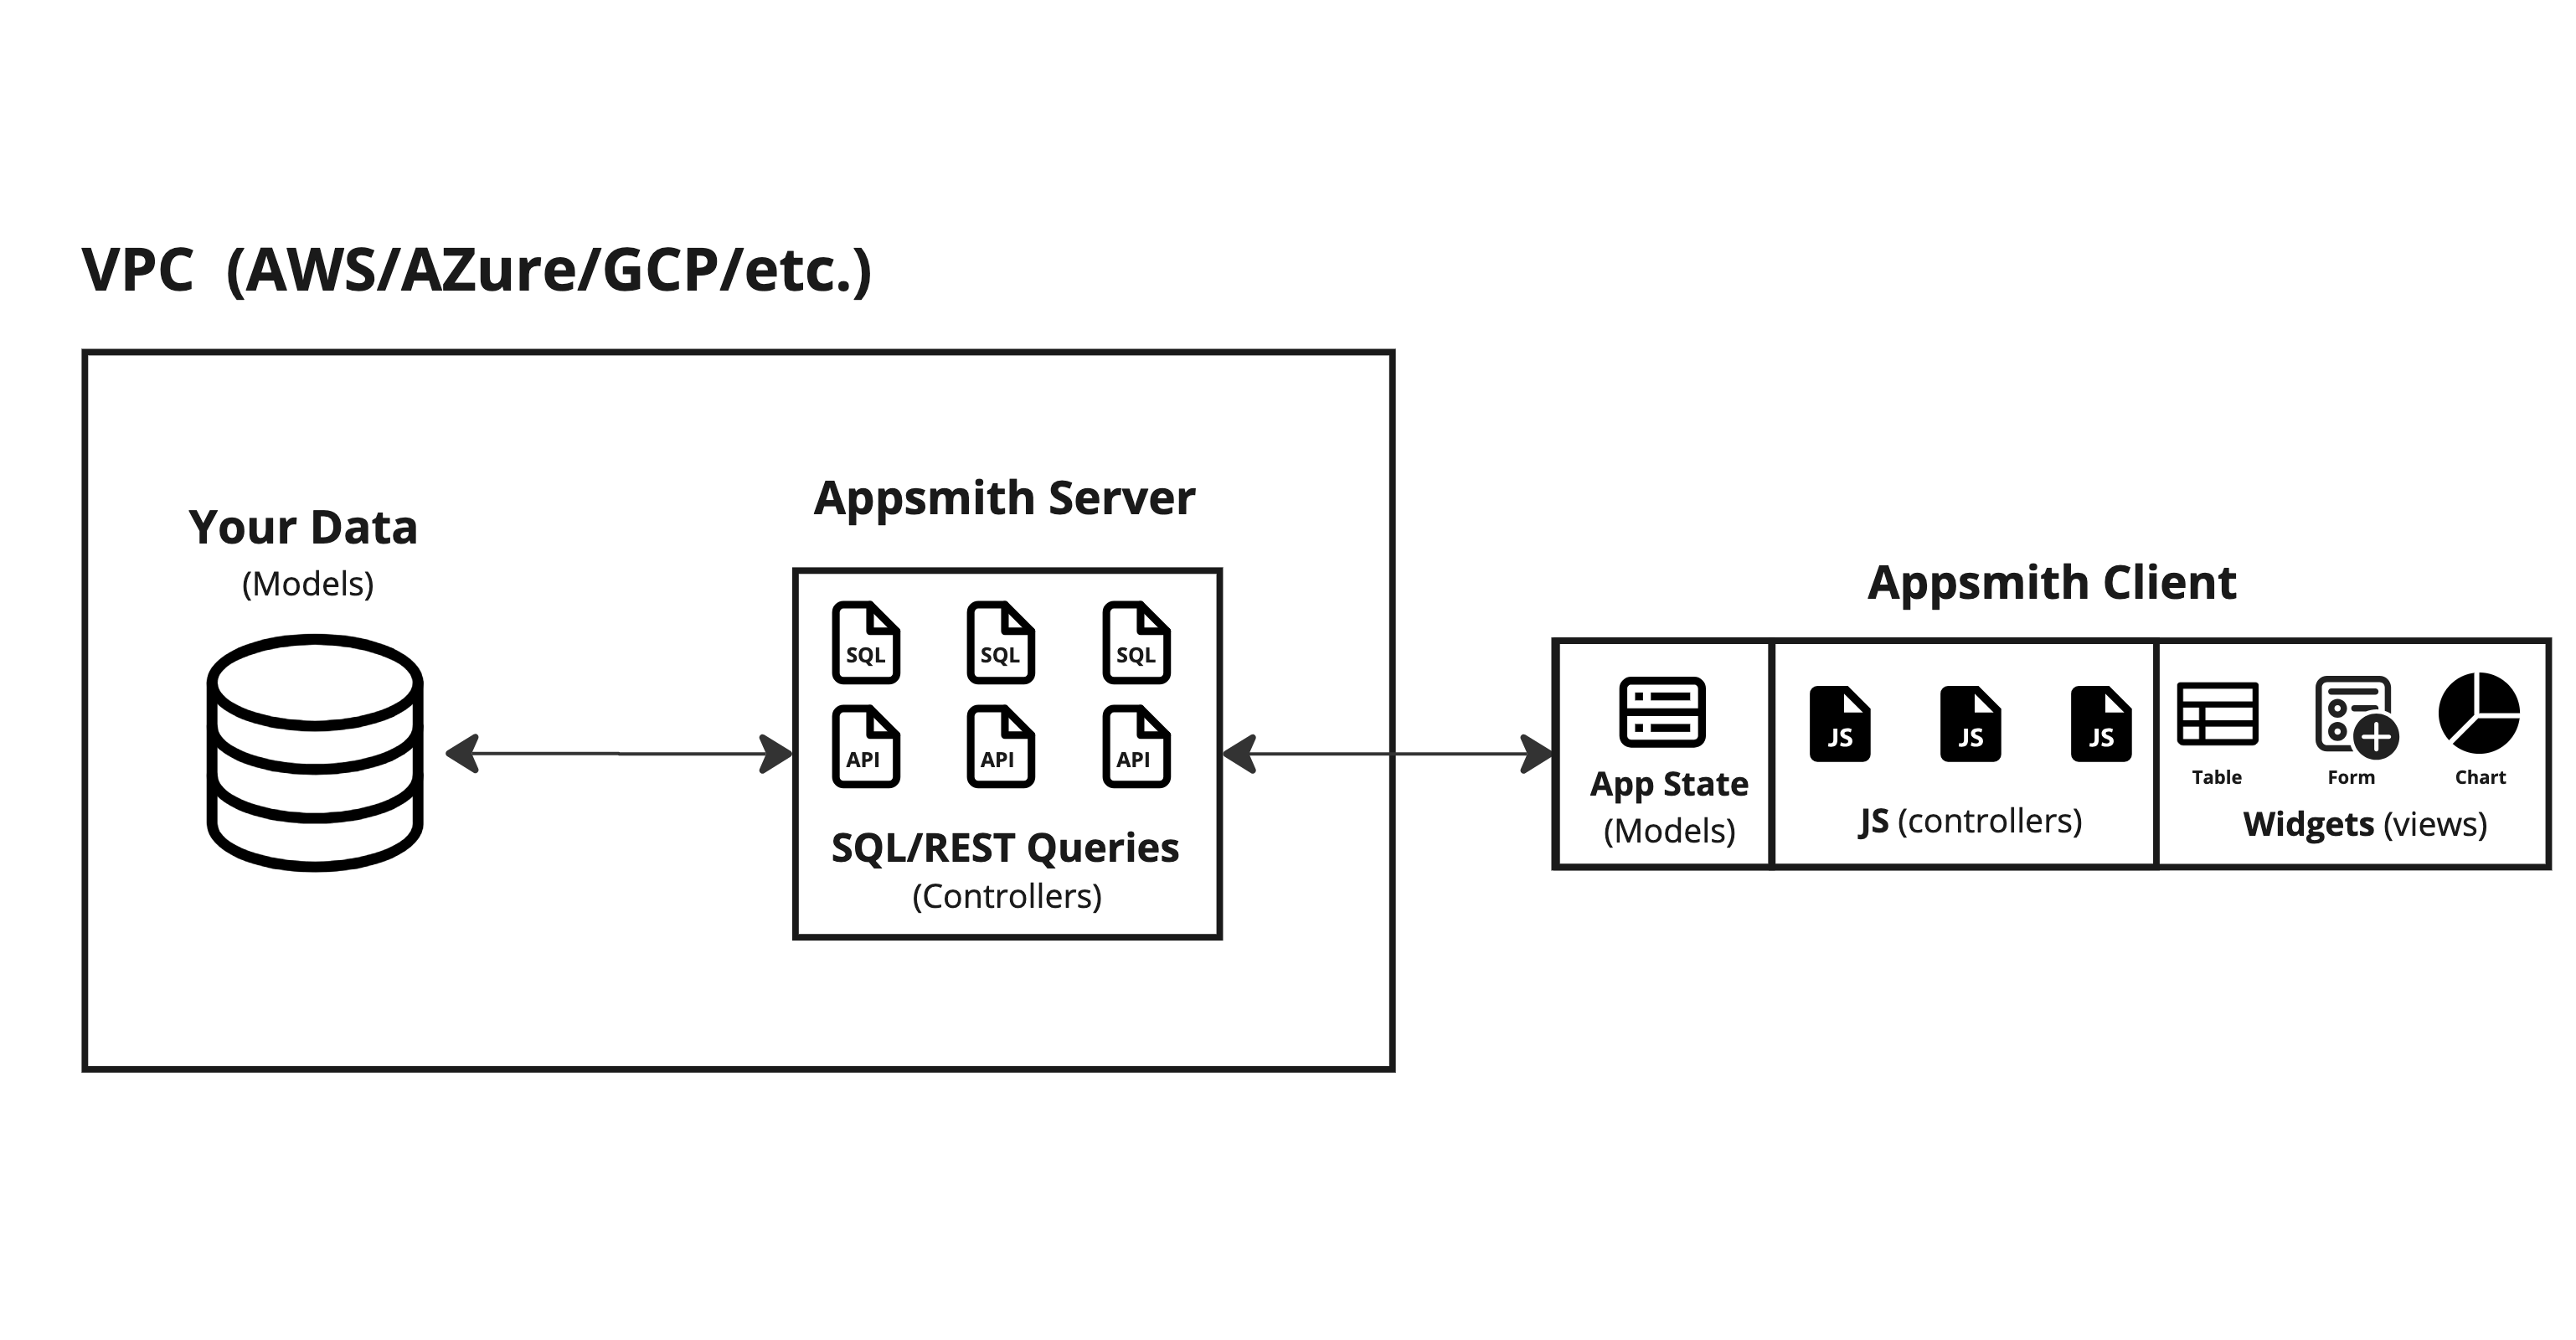 Appsmith Client Server Model